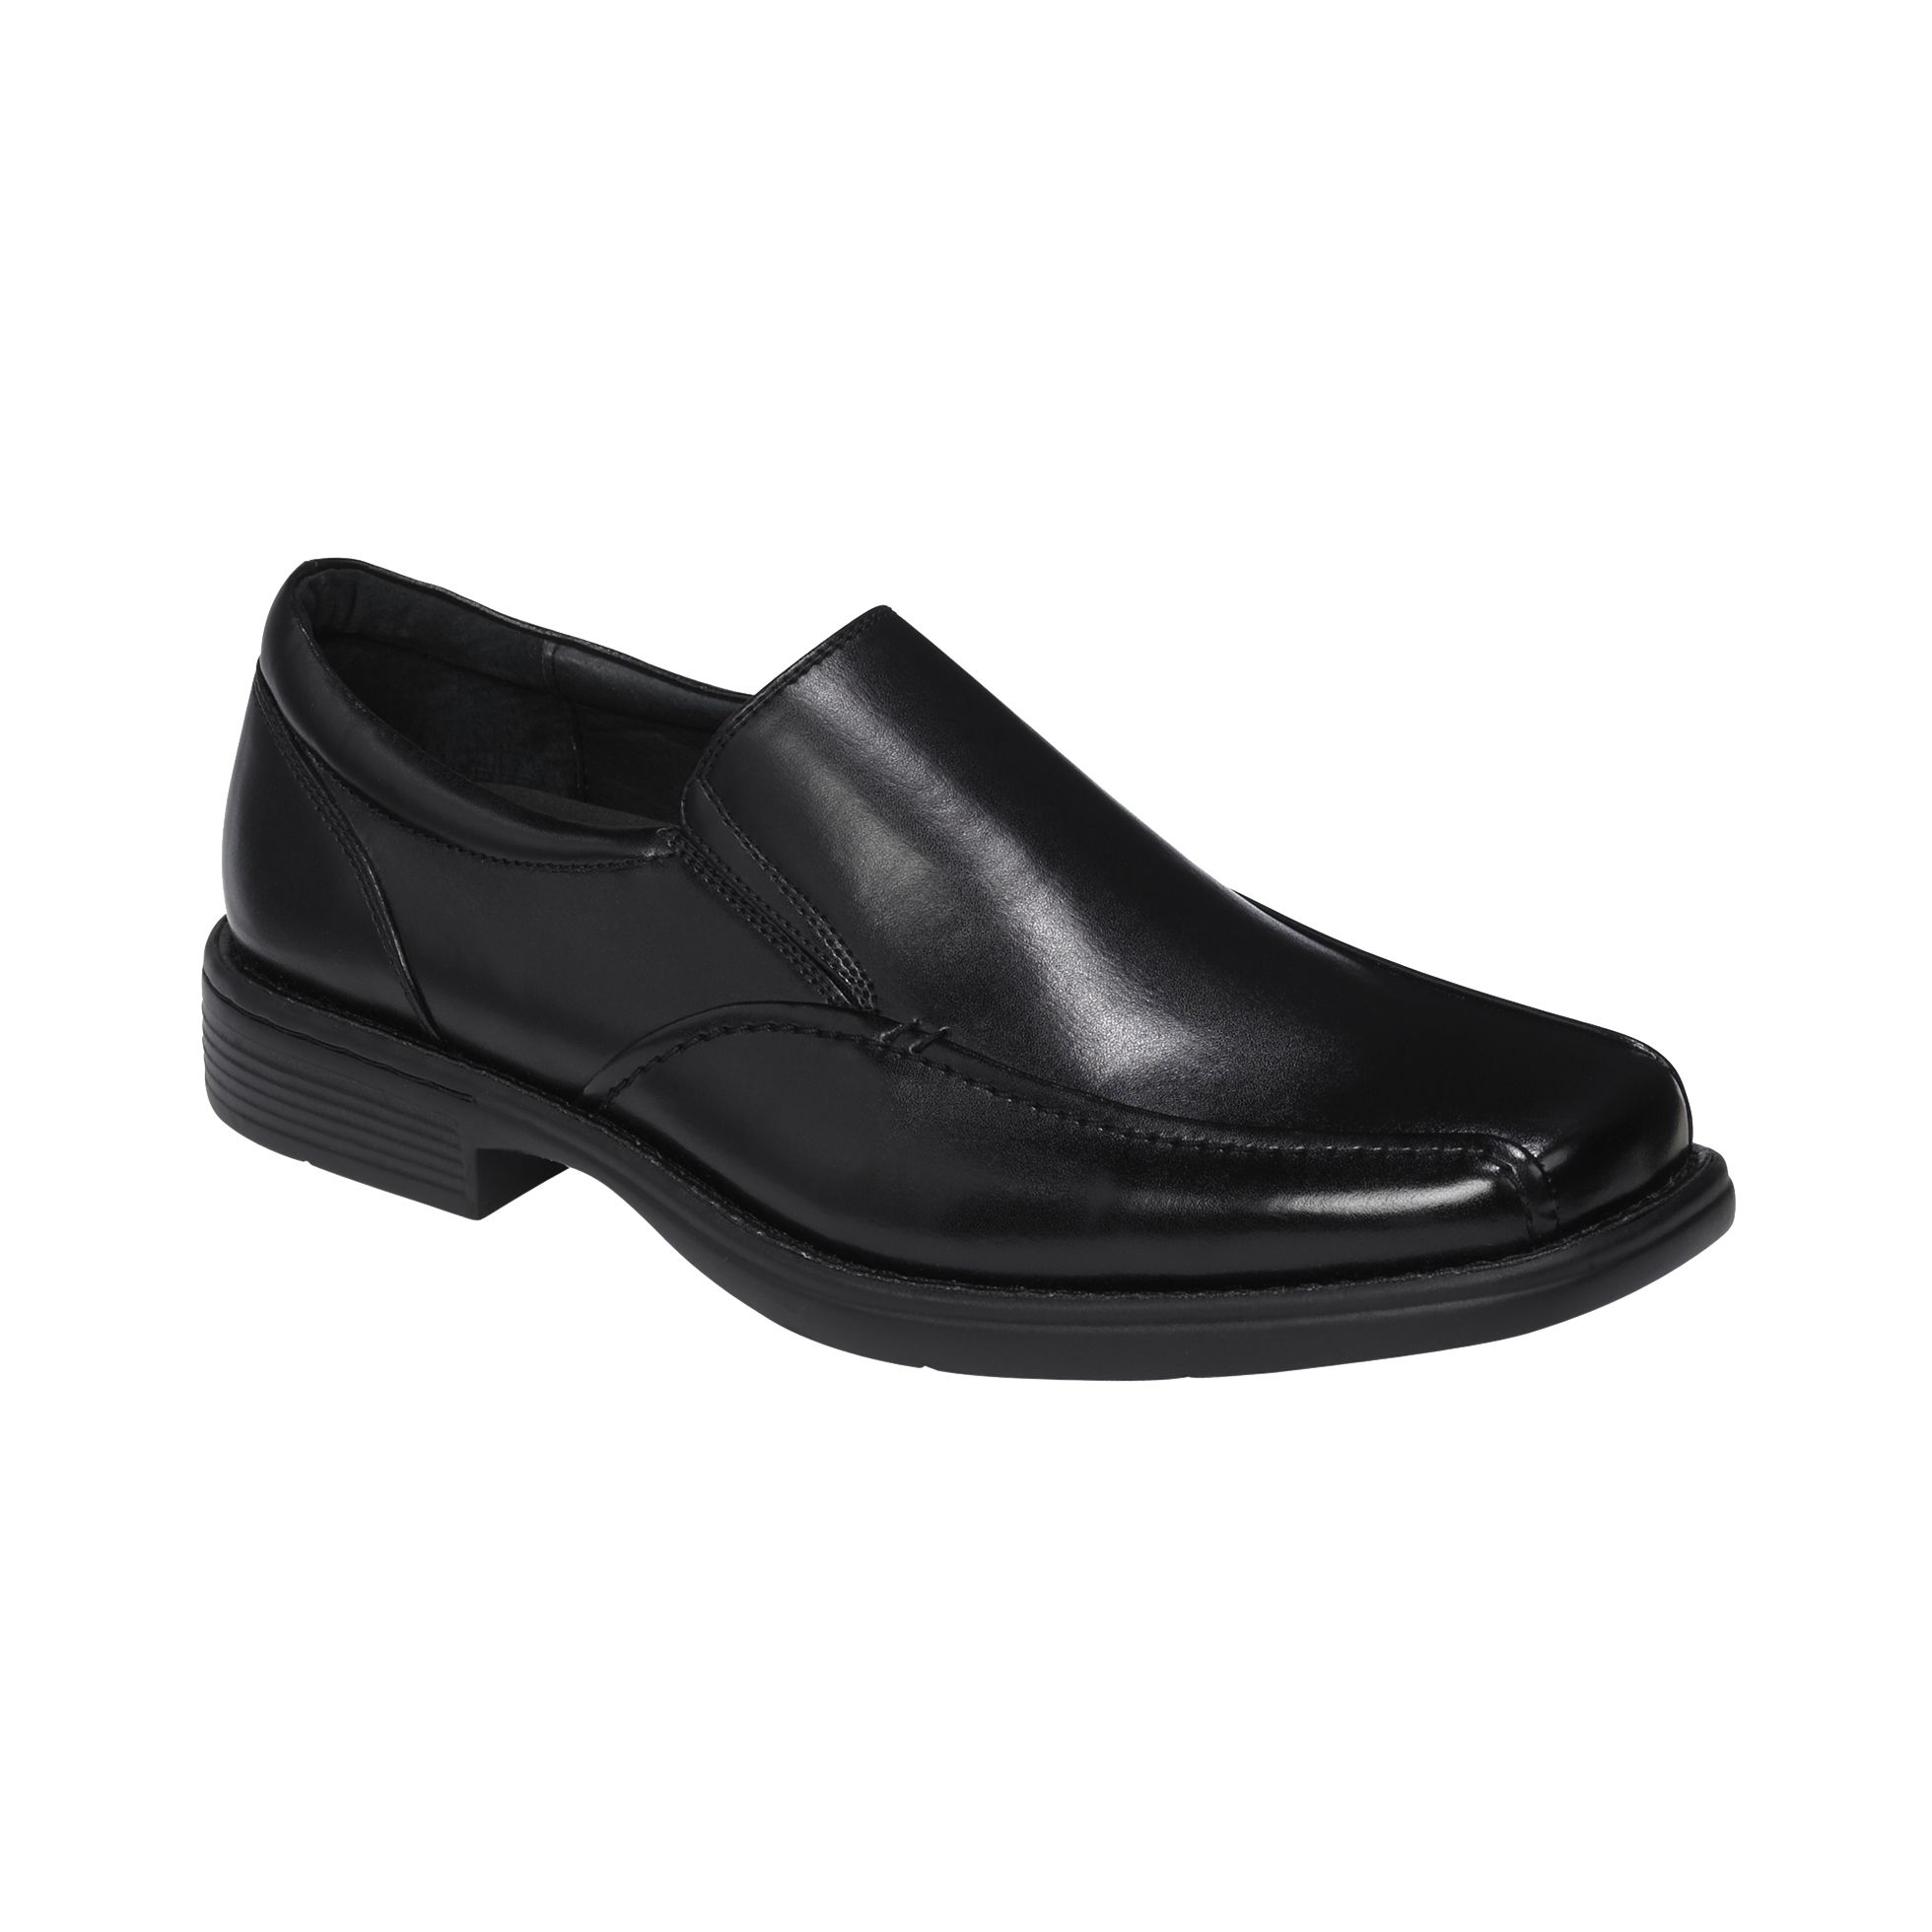 Men's Oxford Shoe in Black: Kalgan Men’s Loafer from Kmart